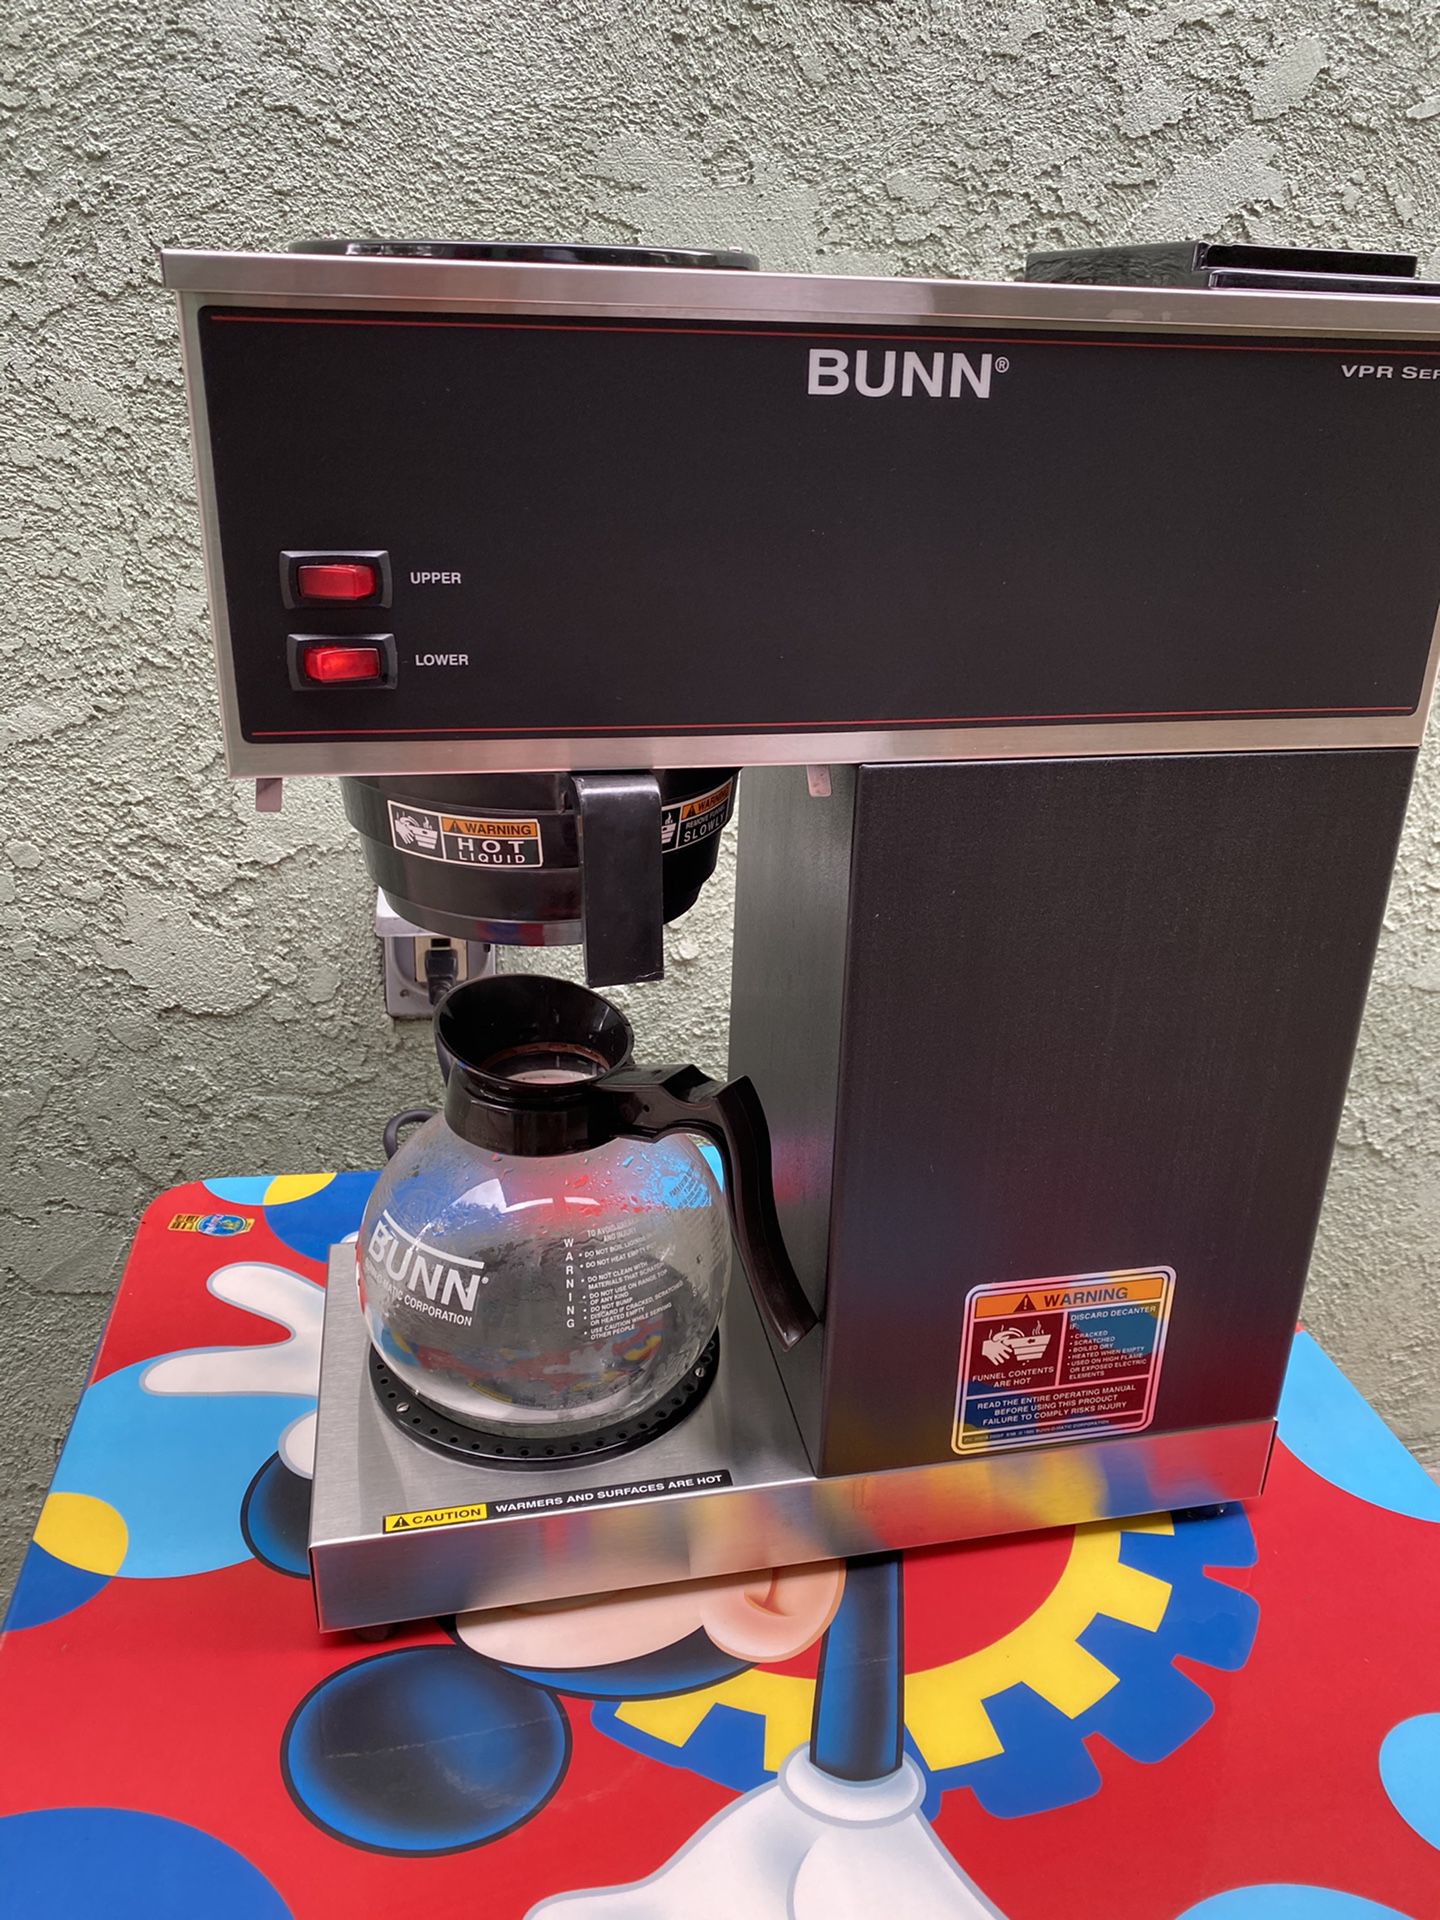 Bunn Coffee maker $65